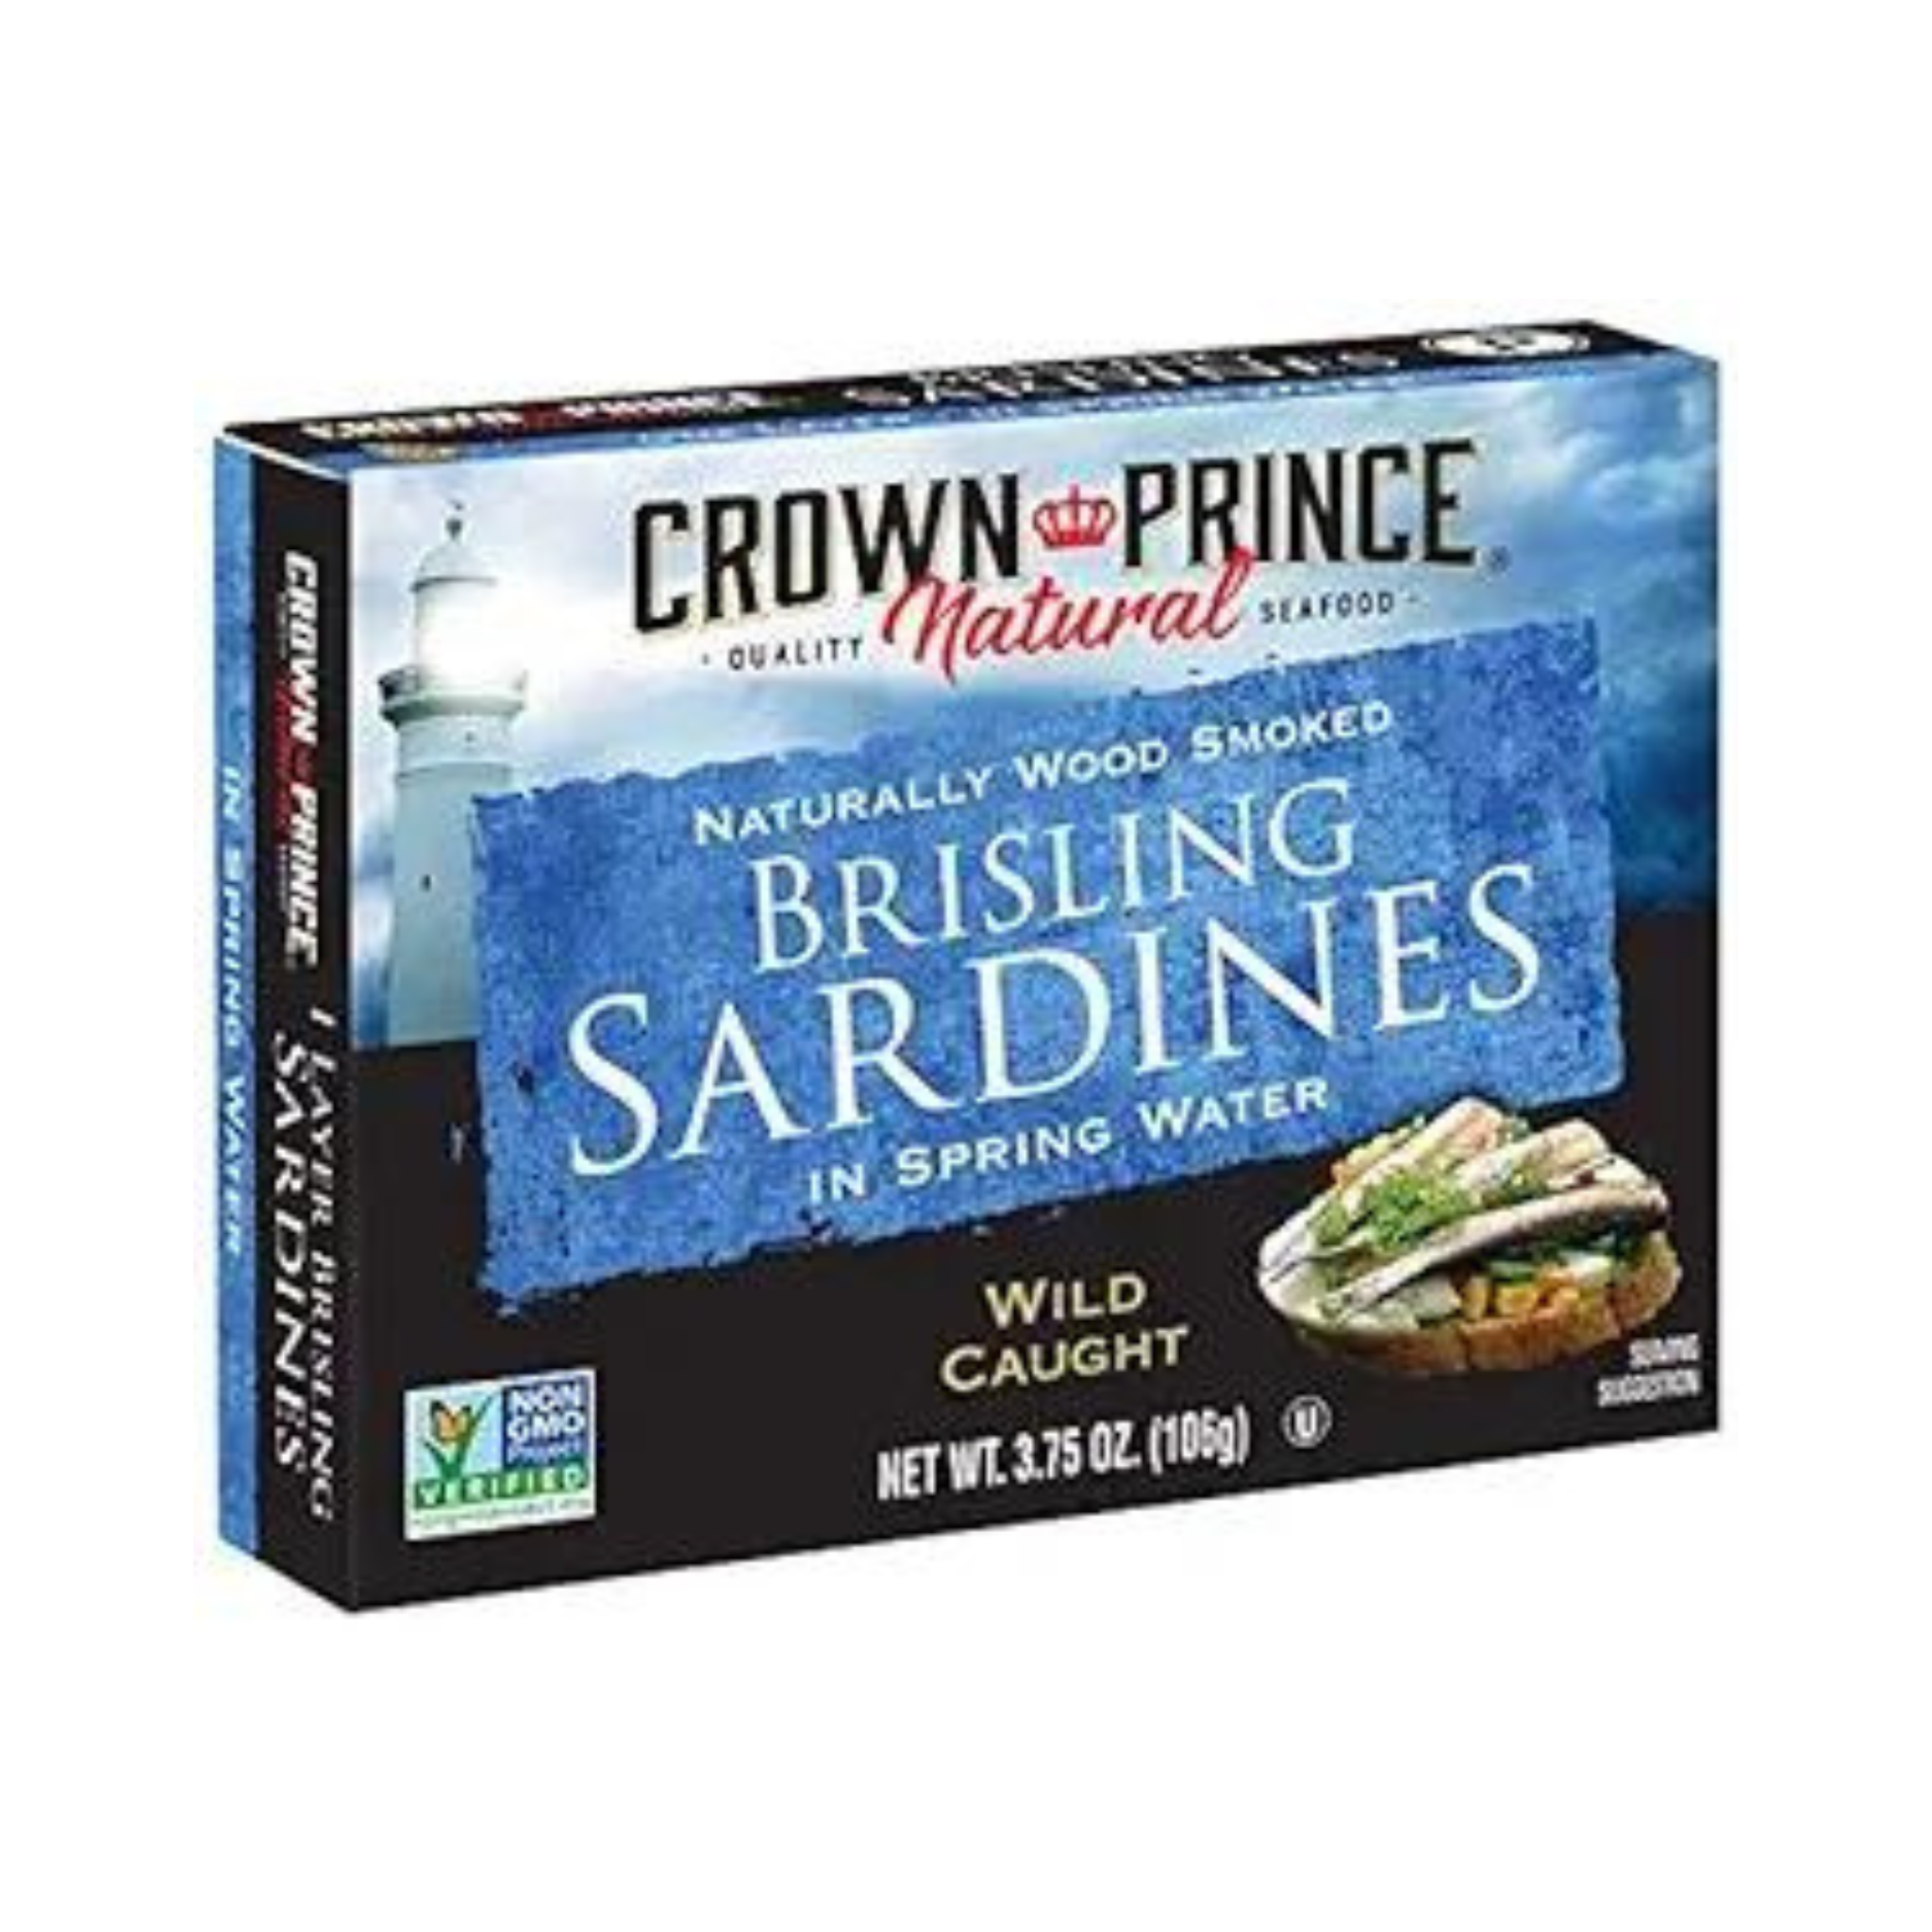 12 Cans Of Crown Prince Natural Brisling Sardines In Spring Water